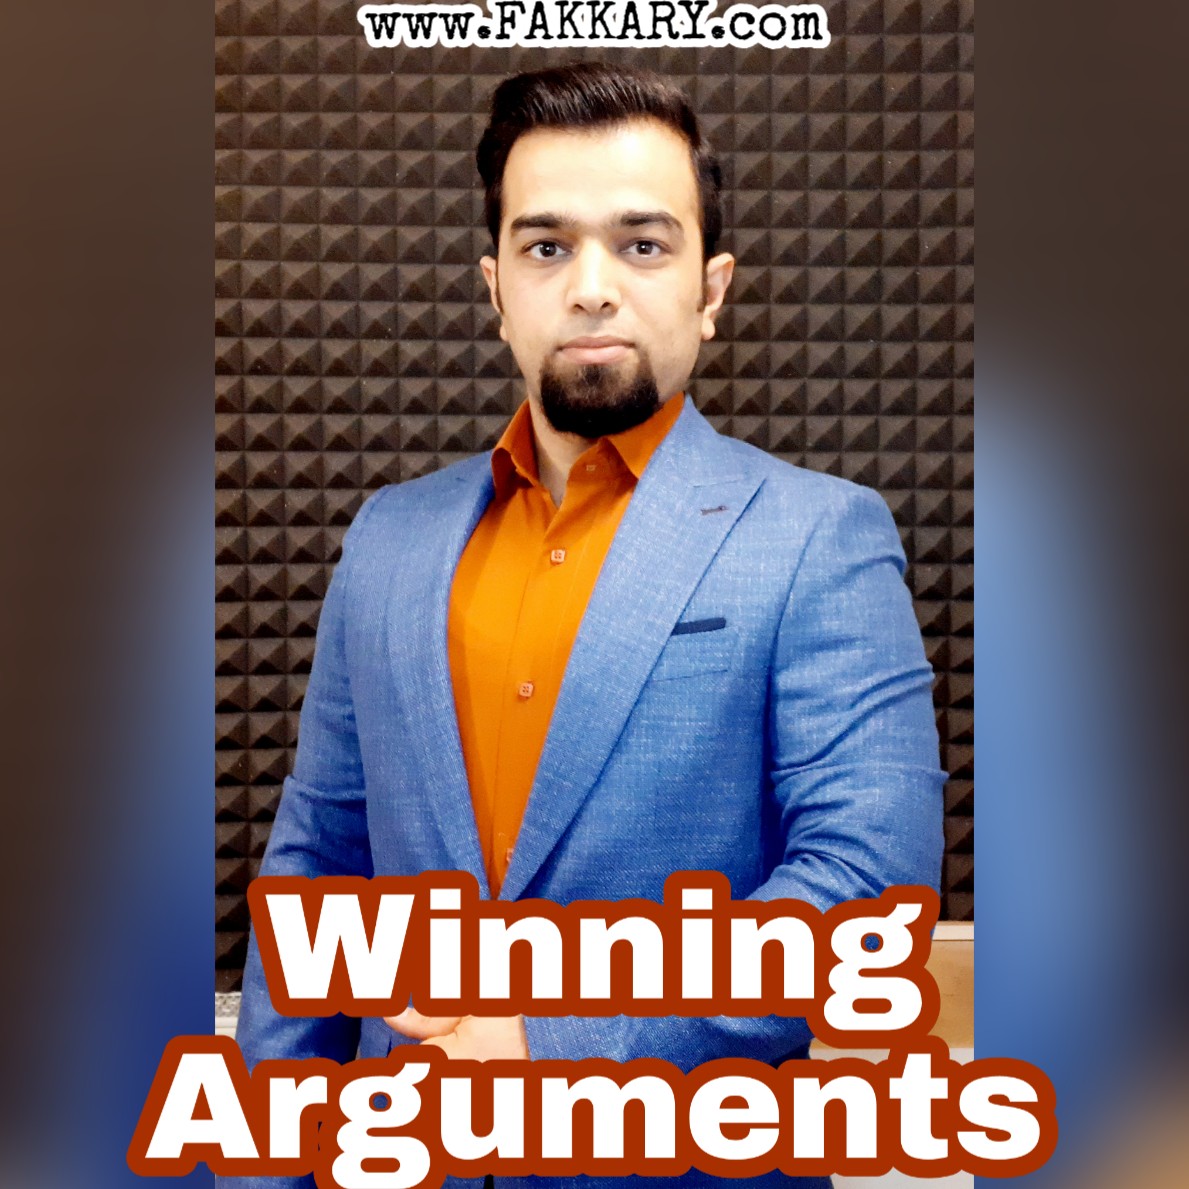 Winning Arguments by Mahdy Fakkary